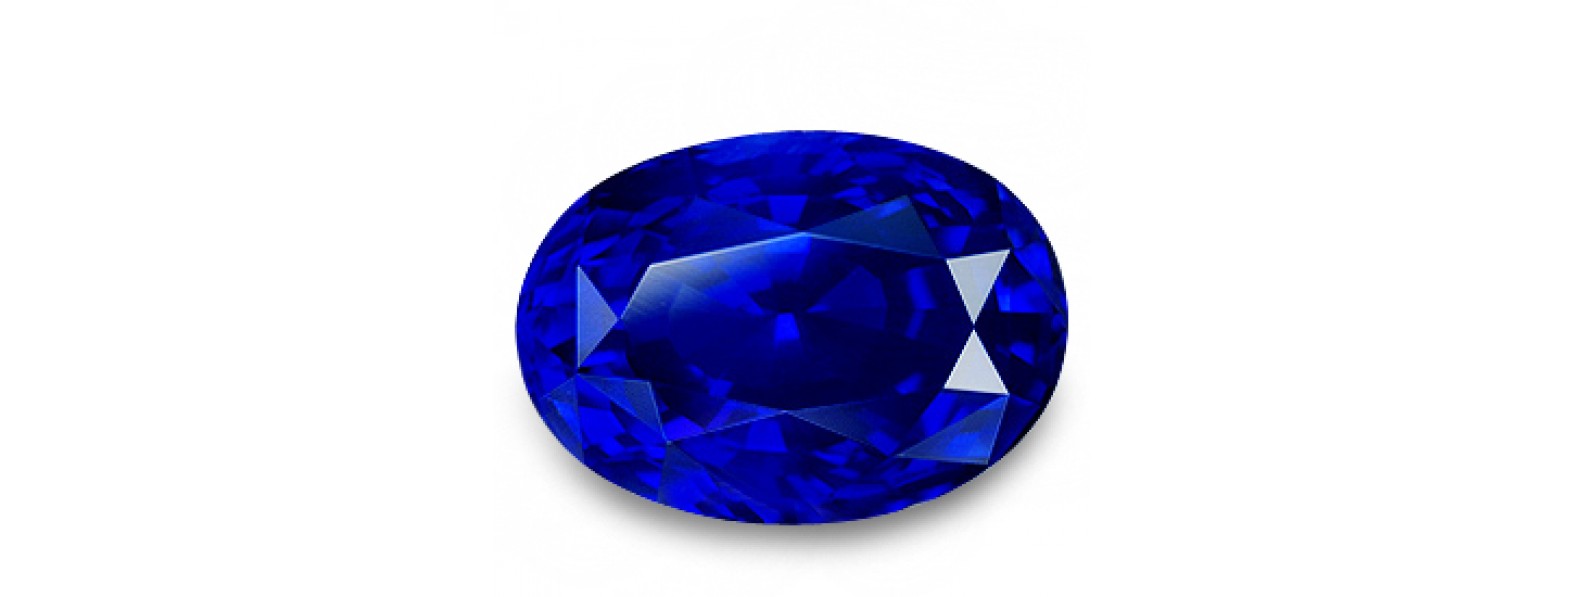 Natural Blue Sapphire Gemstones Online | Buy Sapphire Gemstone Online at Best Price - Gempiece